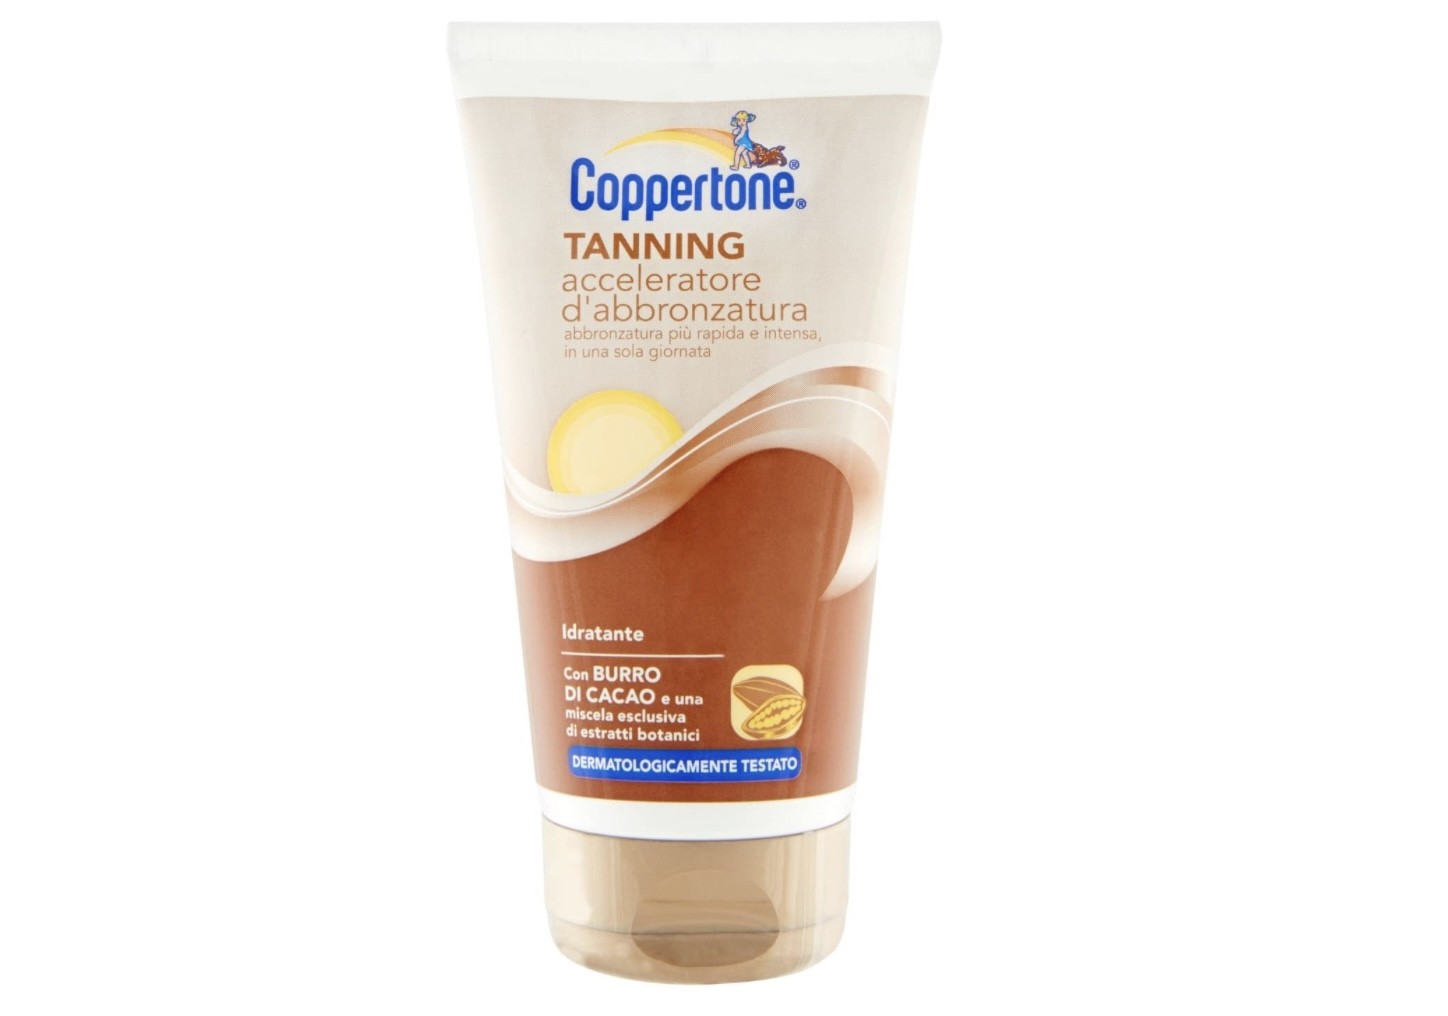 Coppertone Tanning Acceleratore